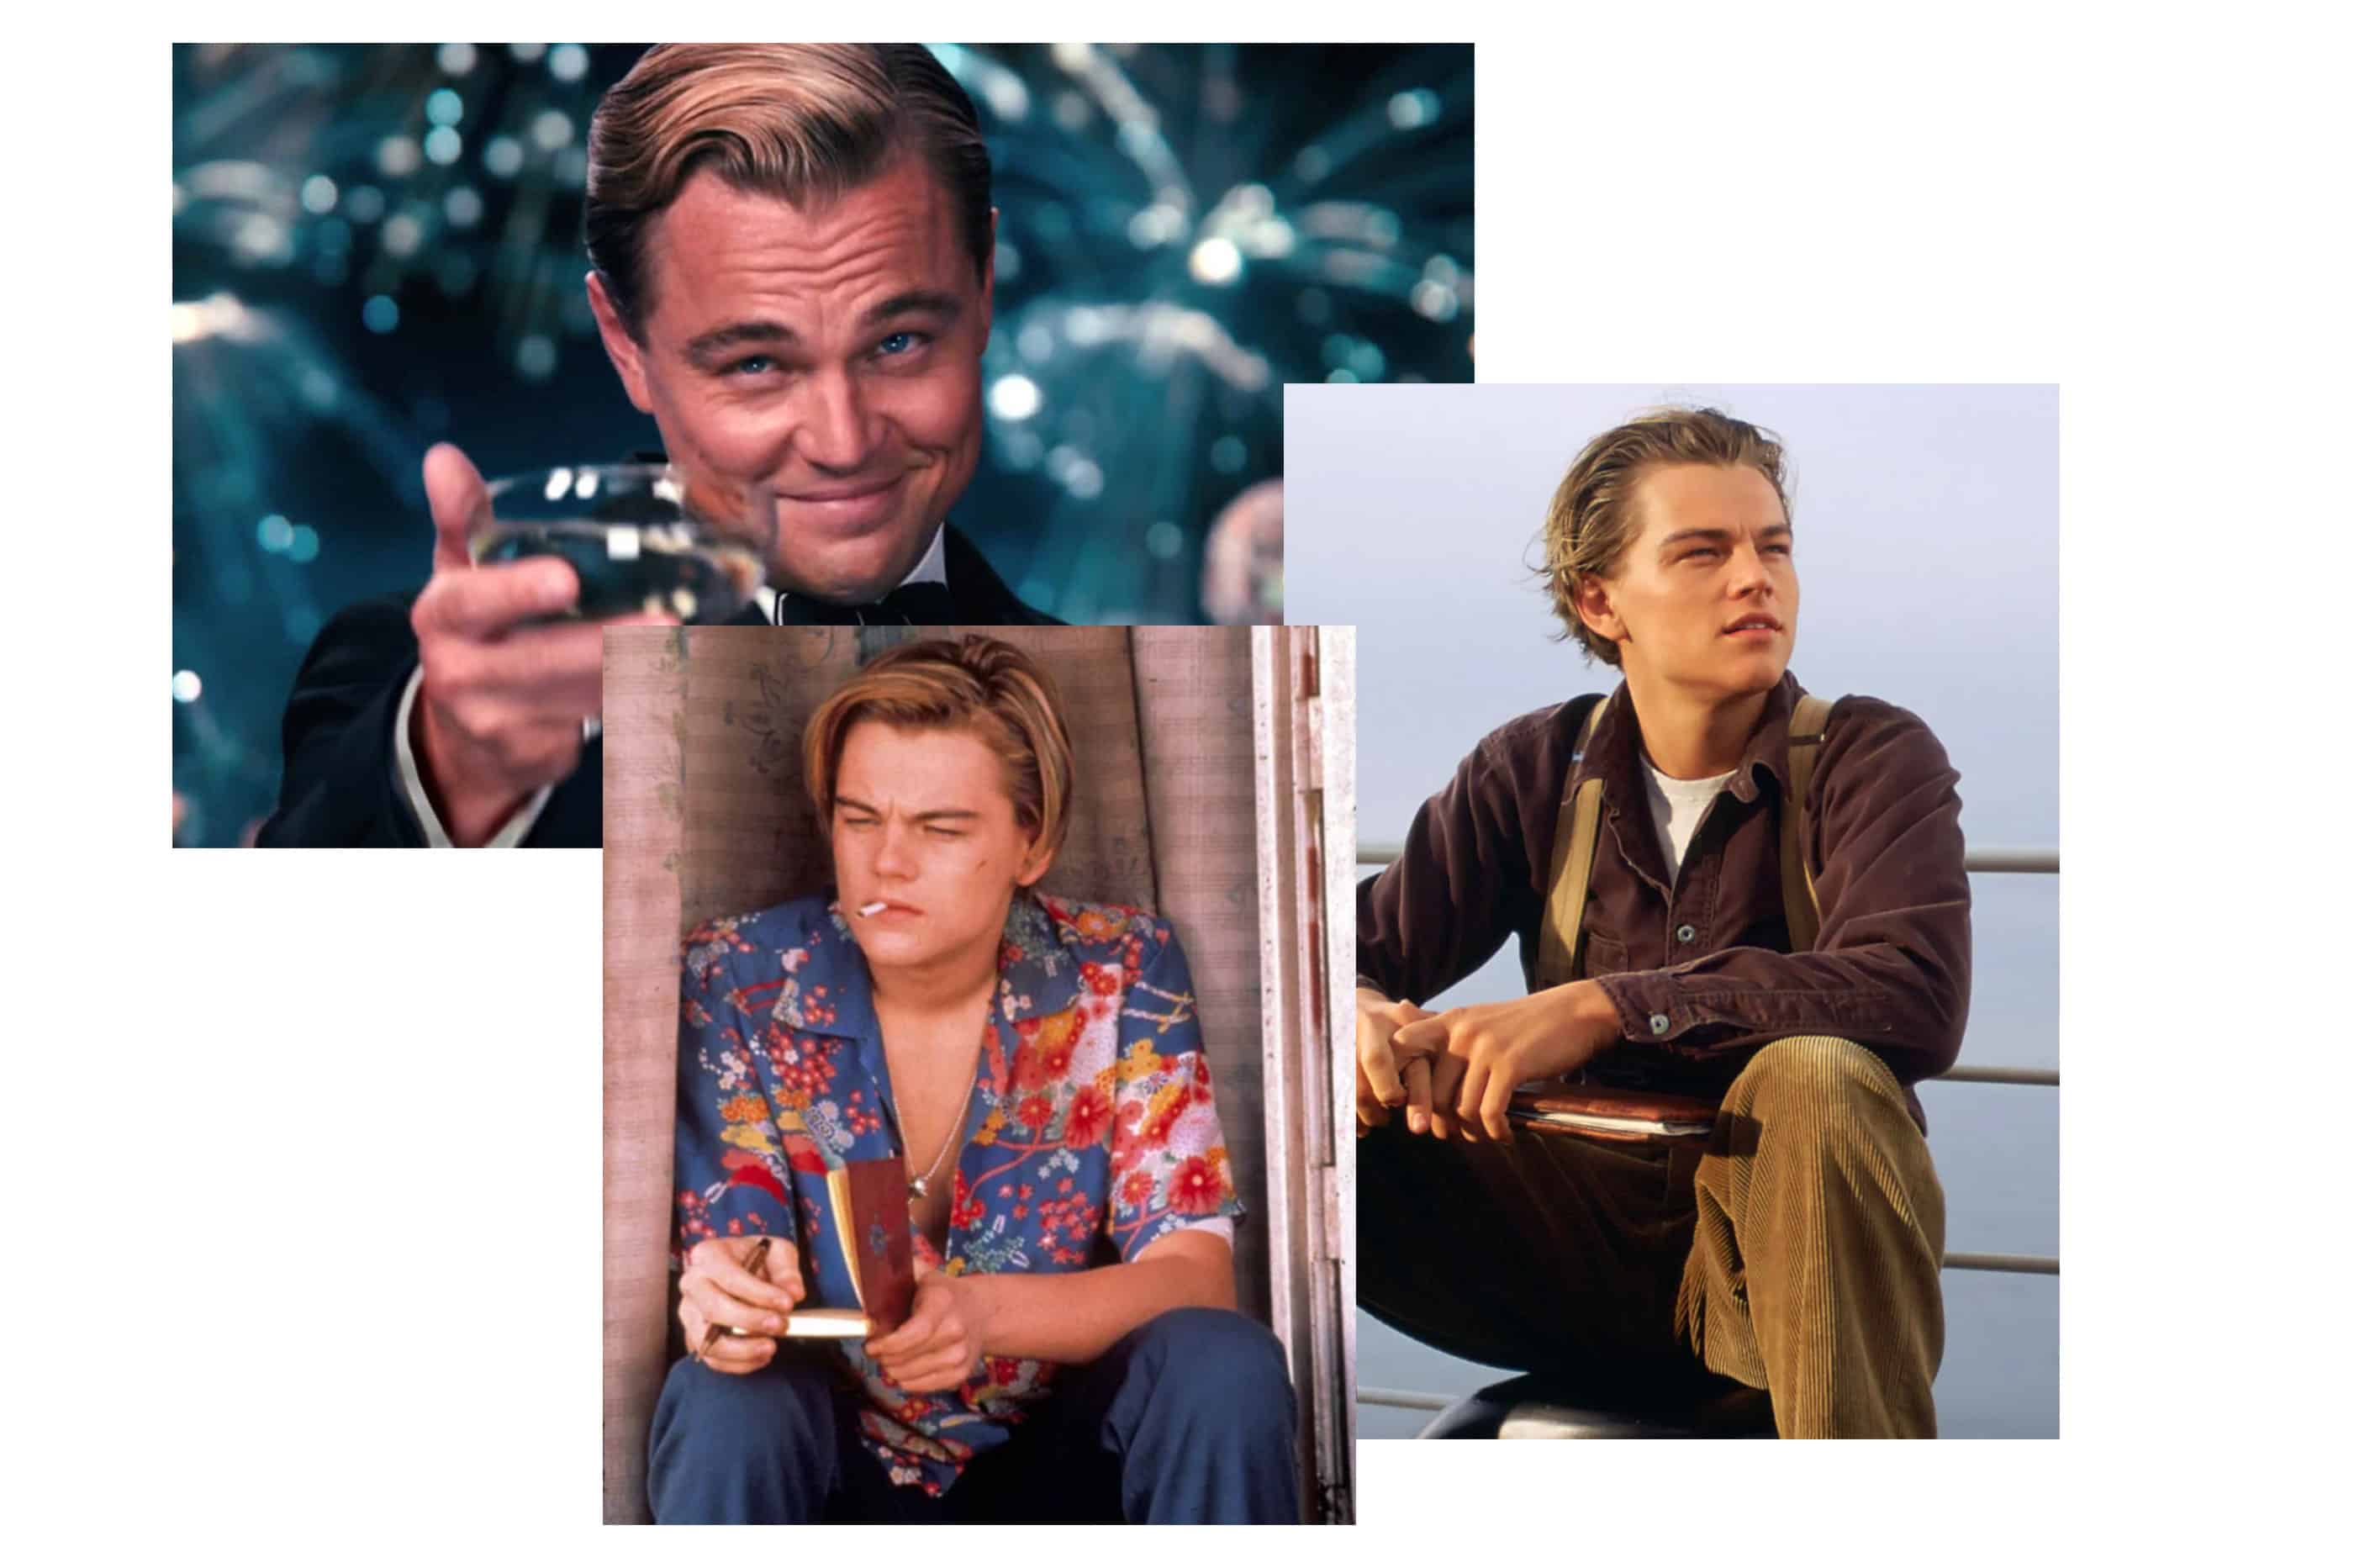 Leonardo DiCaprio style